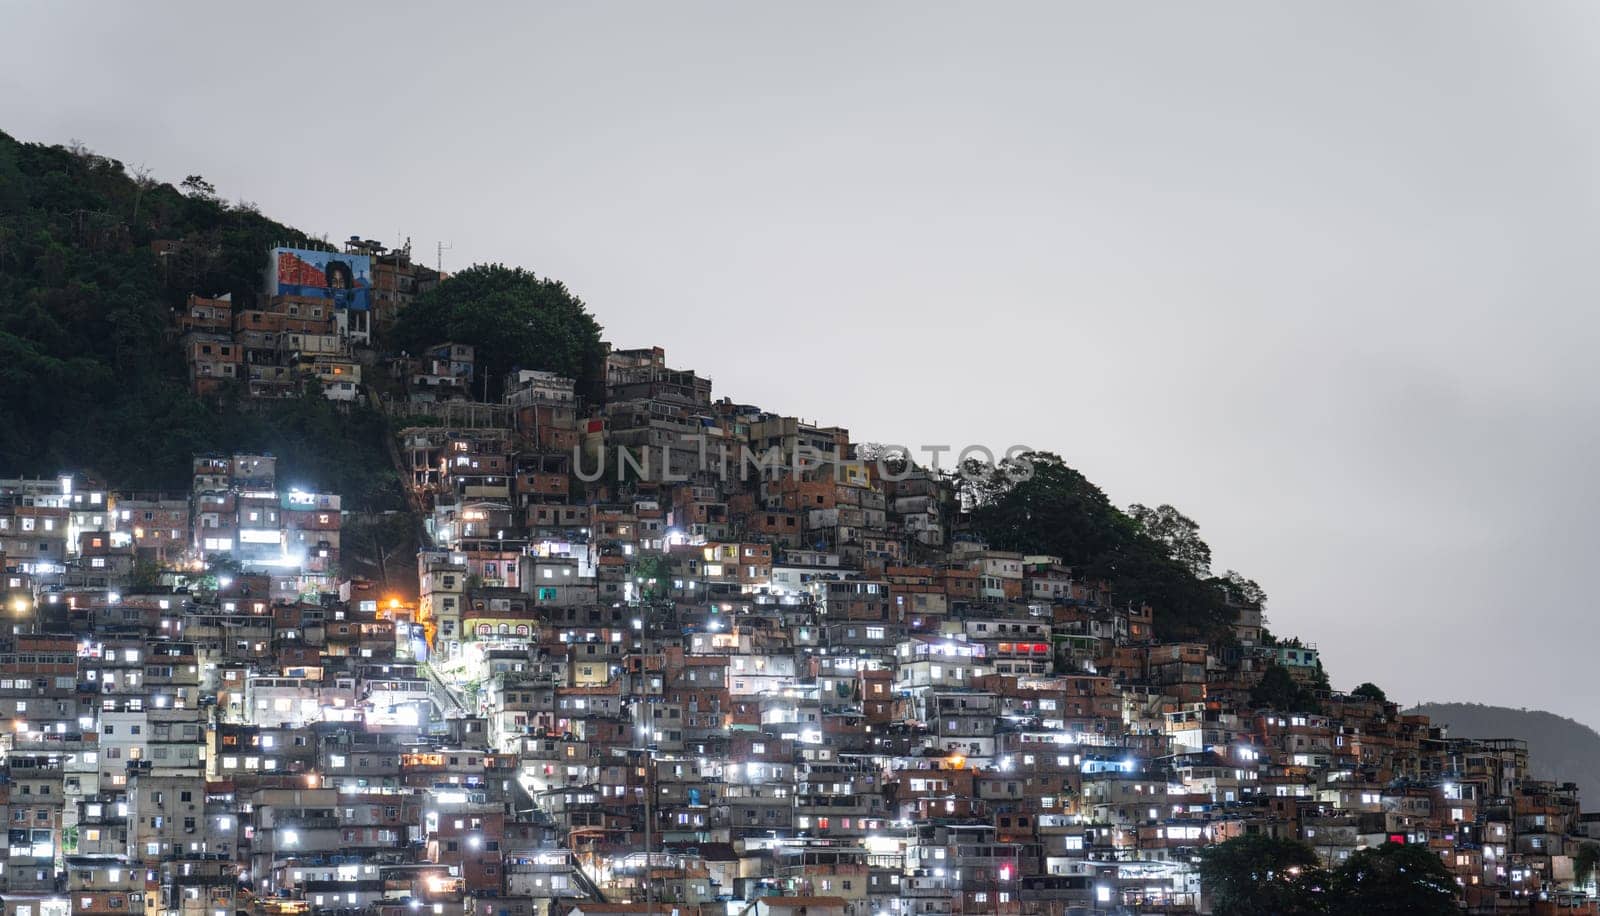 Night View of Dense Hillside Favela in Urban Brazil by FerradalFCG